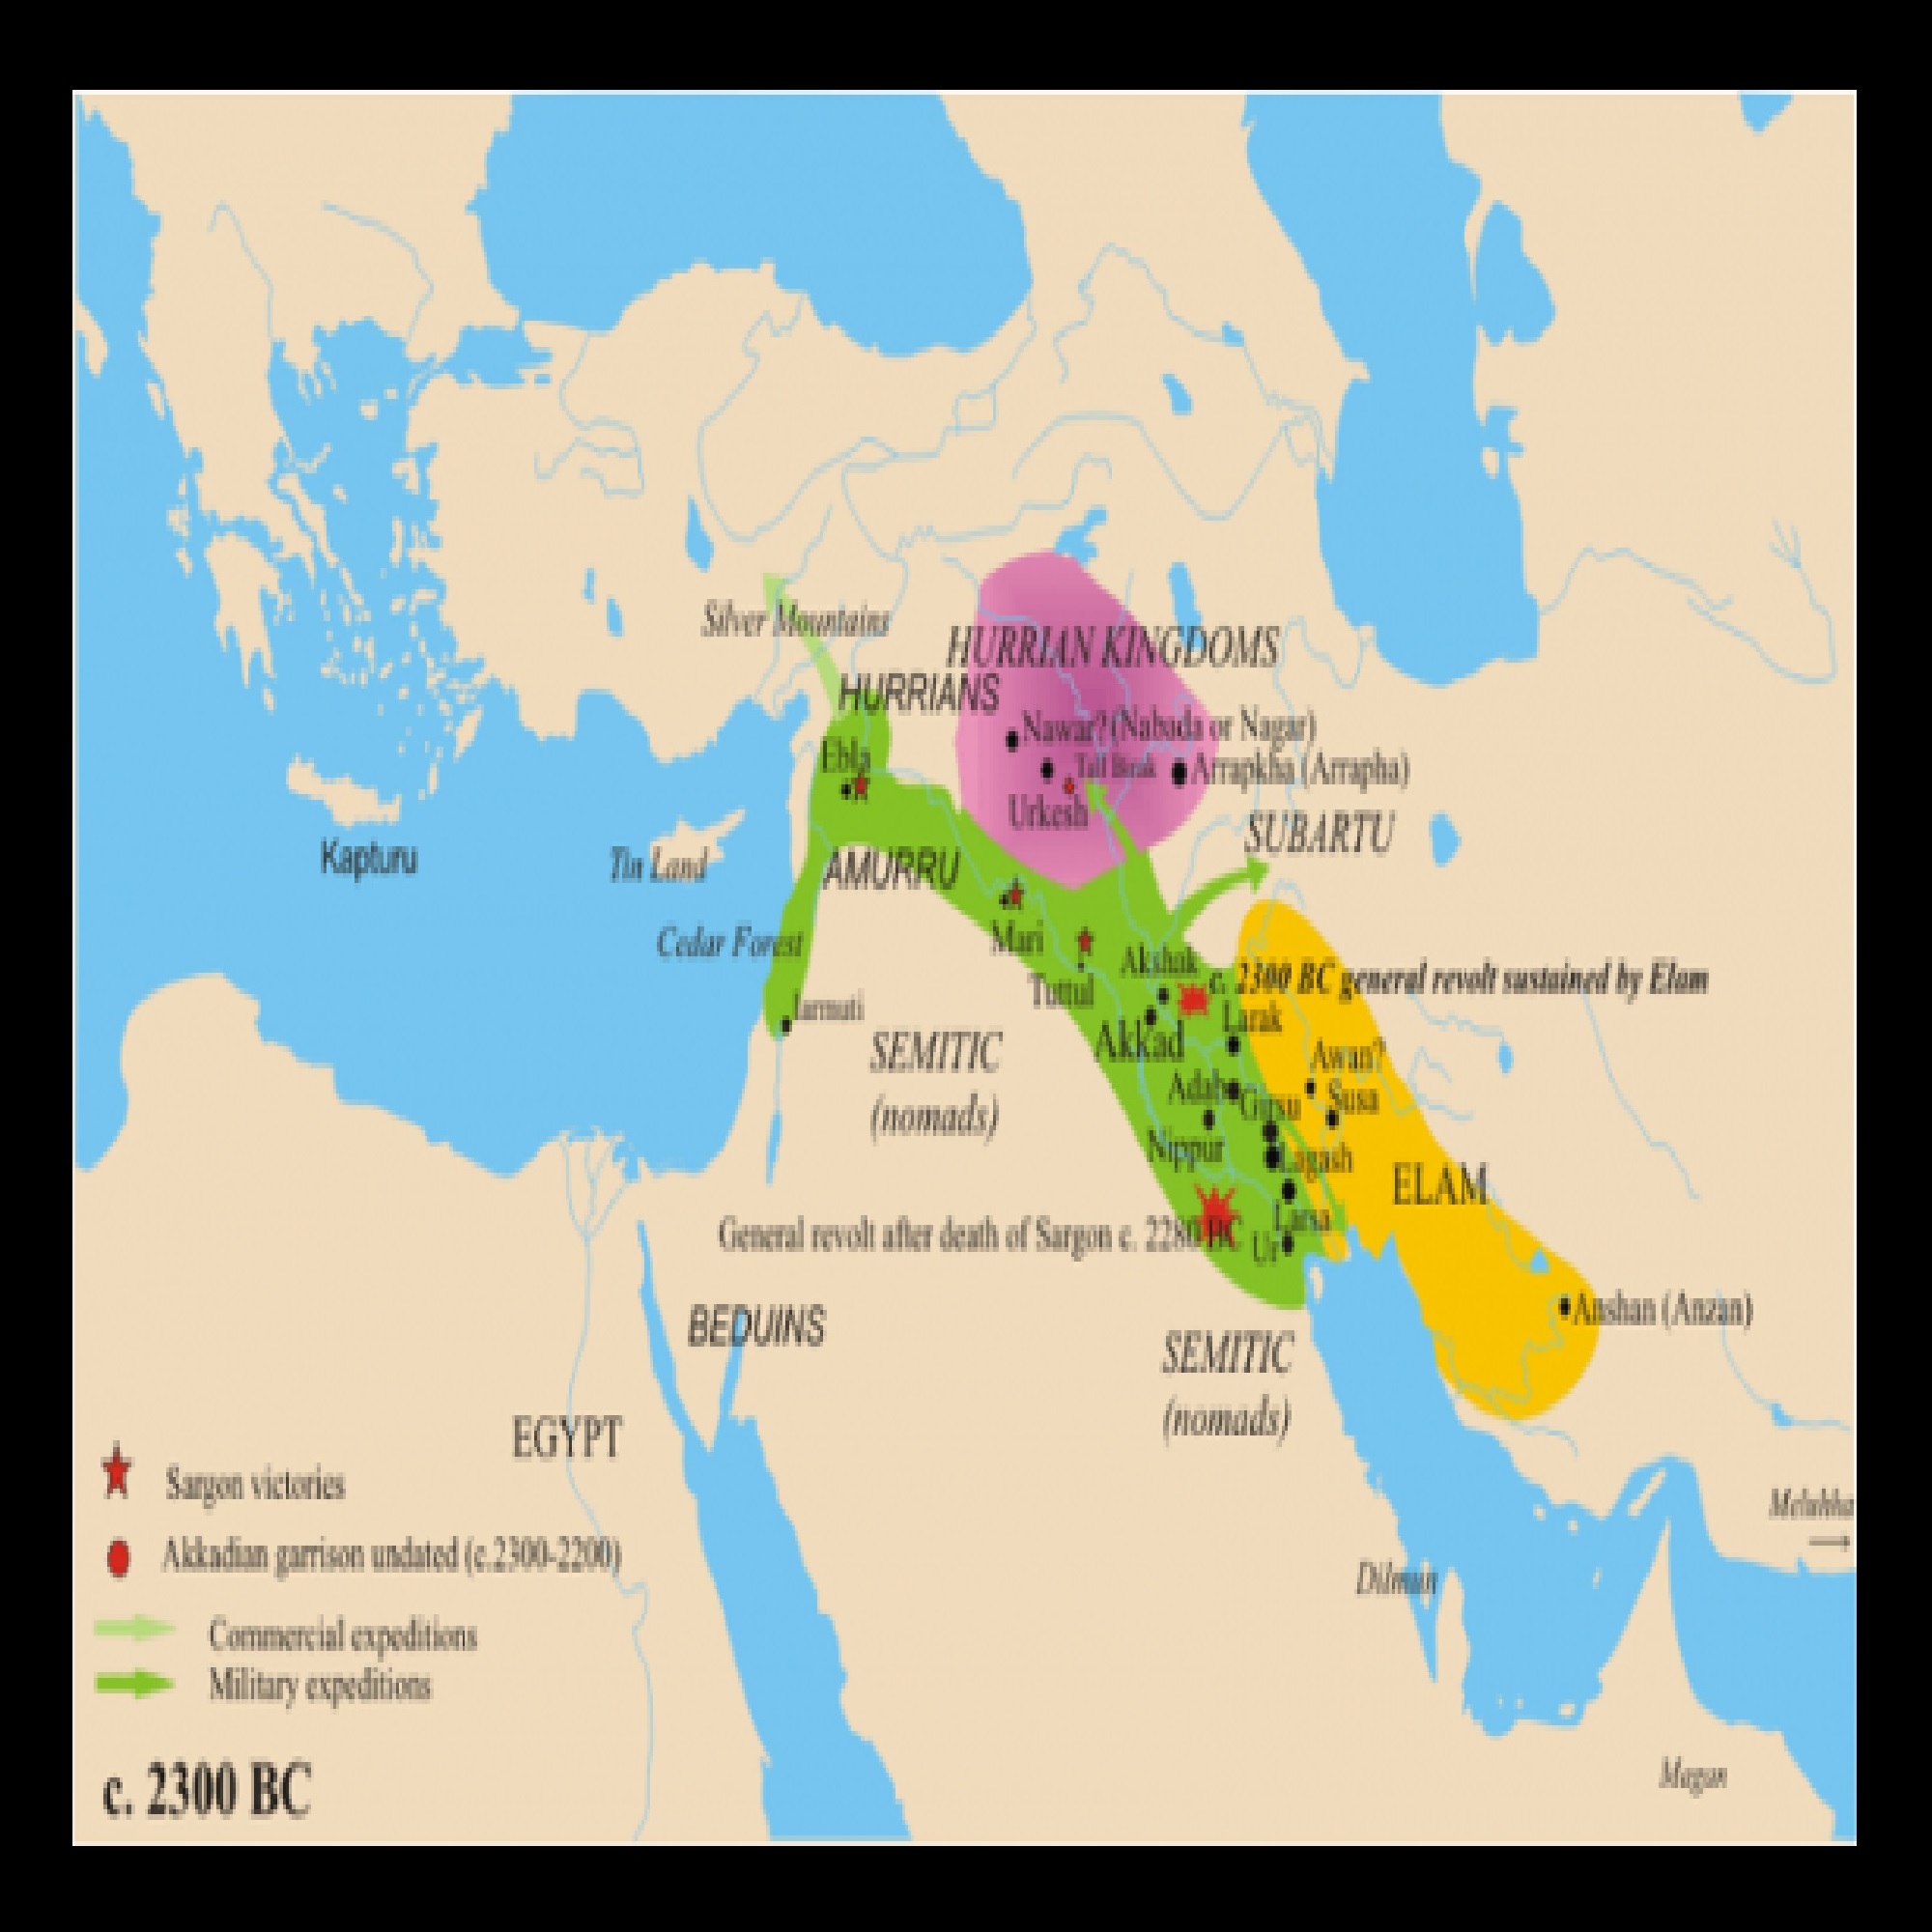 Was Biblical Mitsrayim and Quranic “misra” located at Mathura?